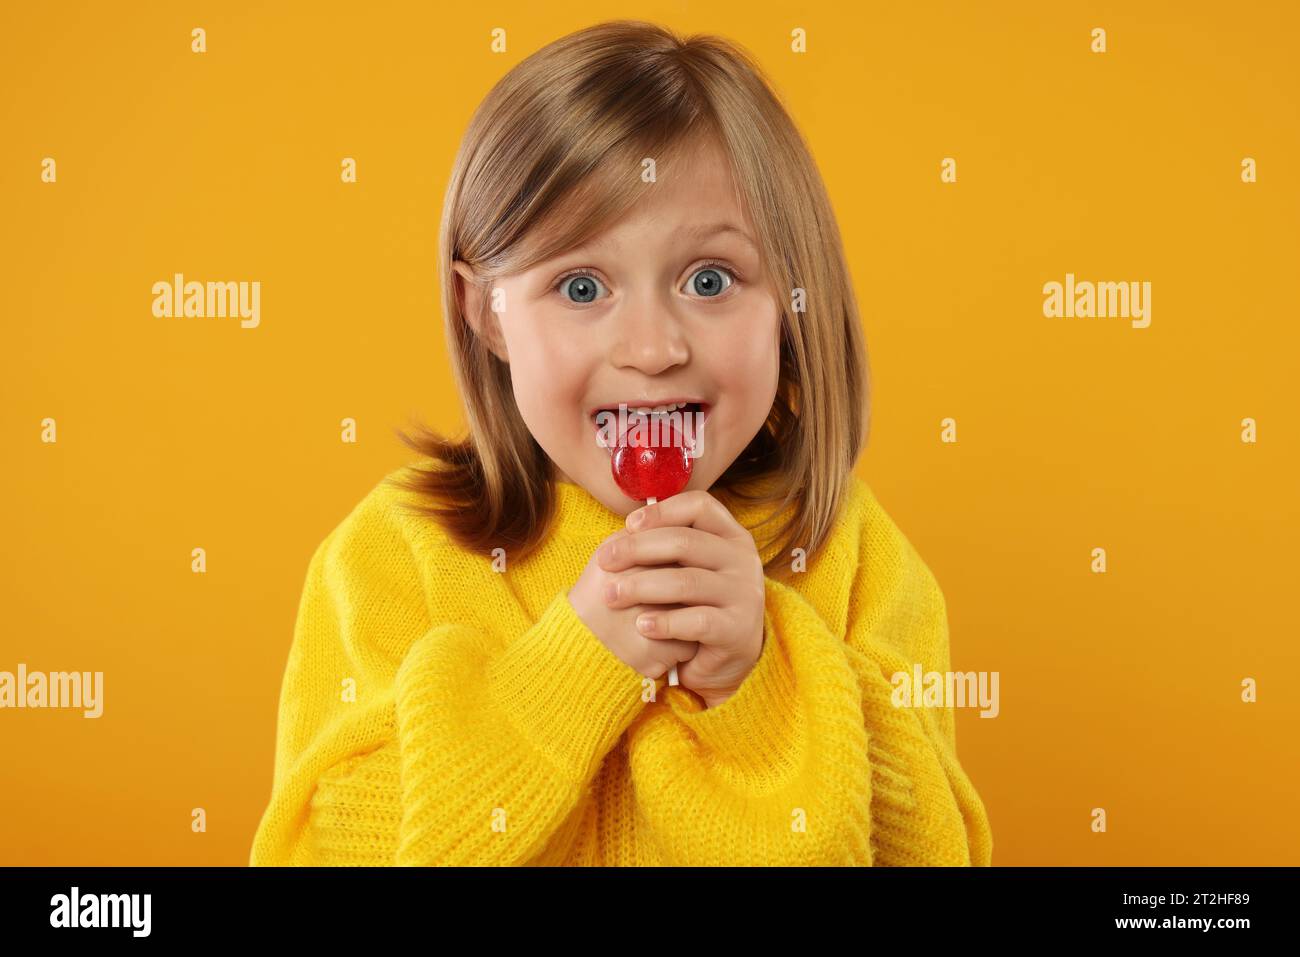 Excited girl licking lollipop on orange background Stock Photo